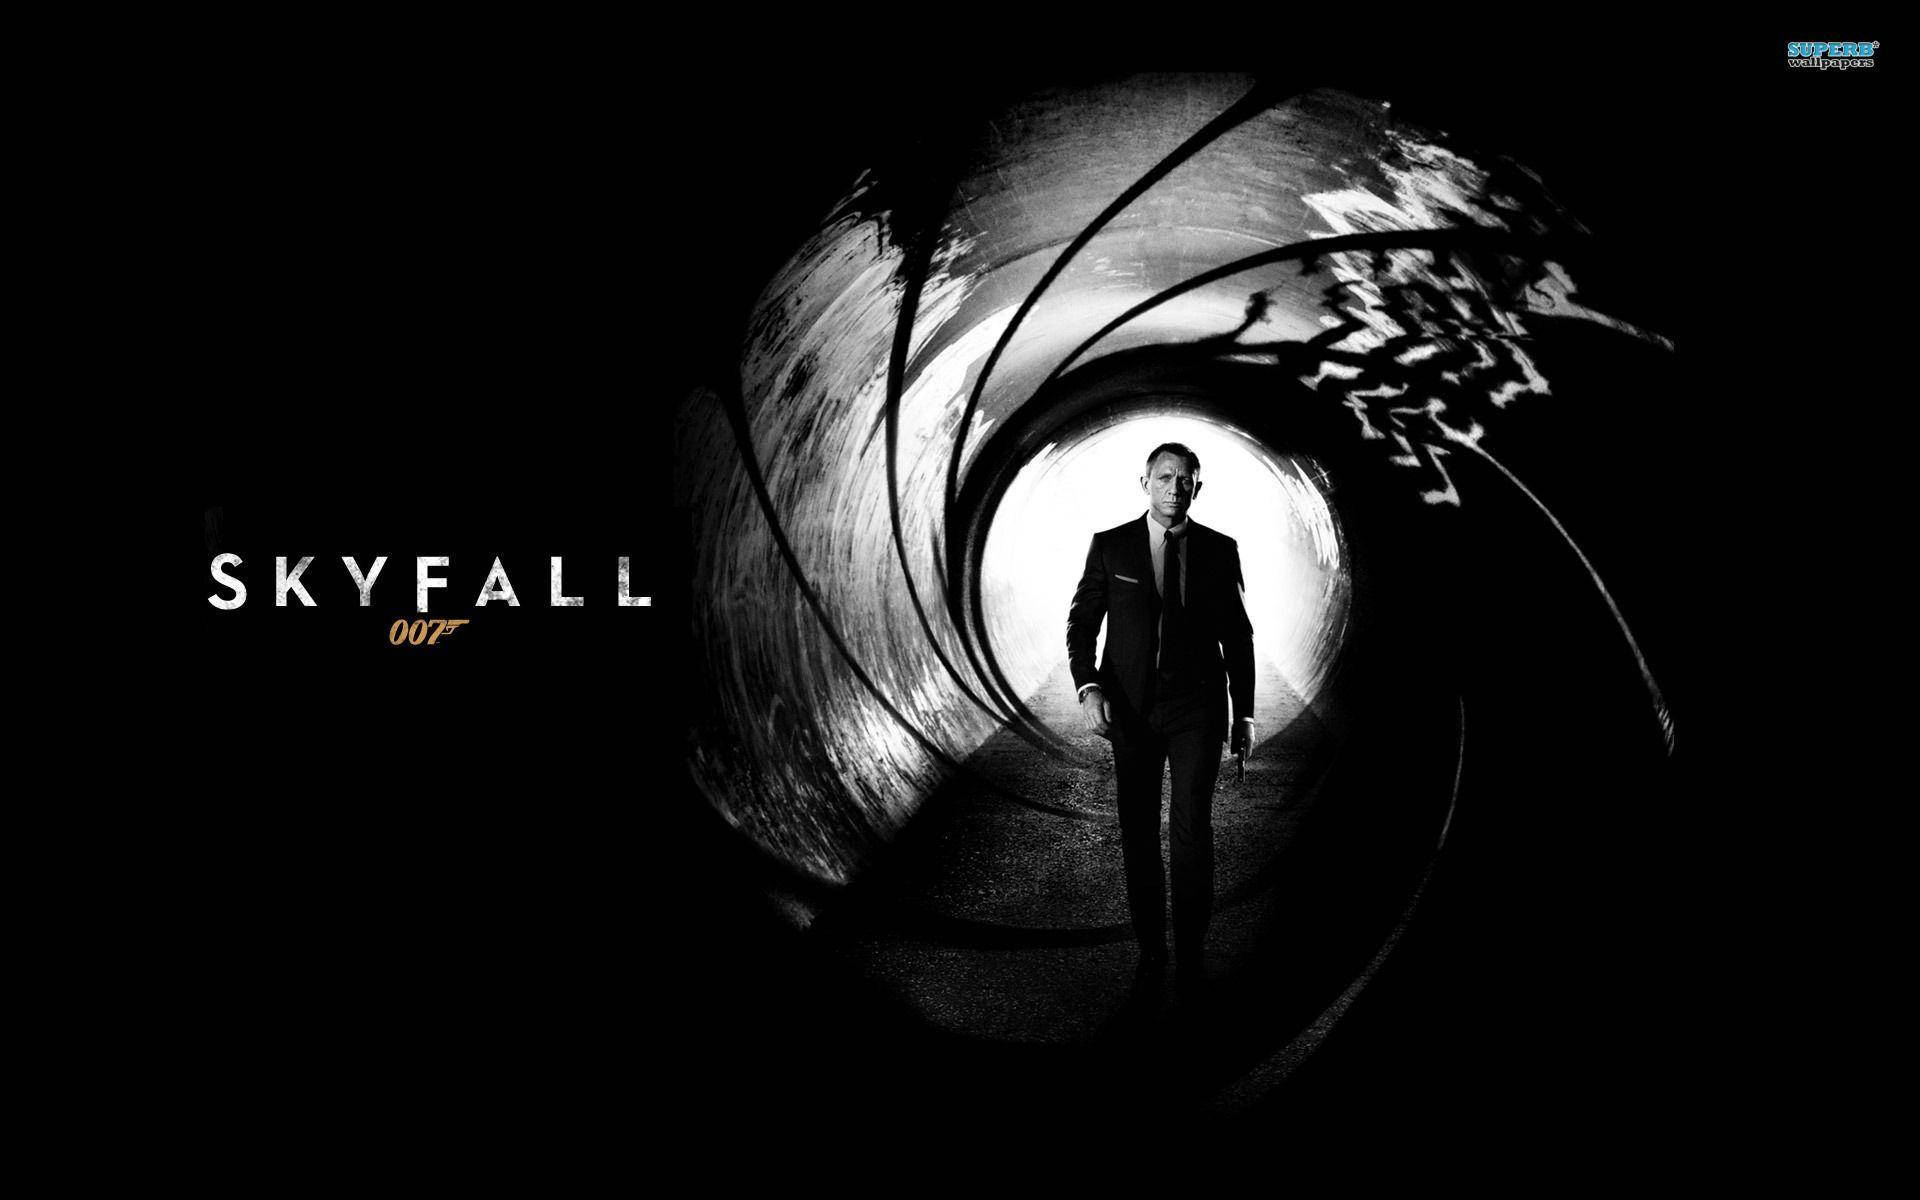 James Bond Skyfall Poster